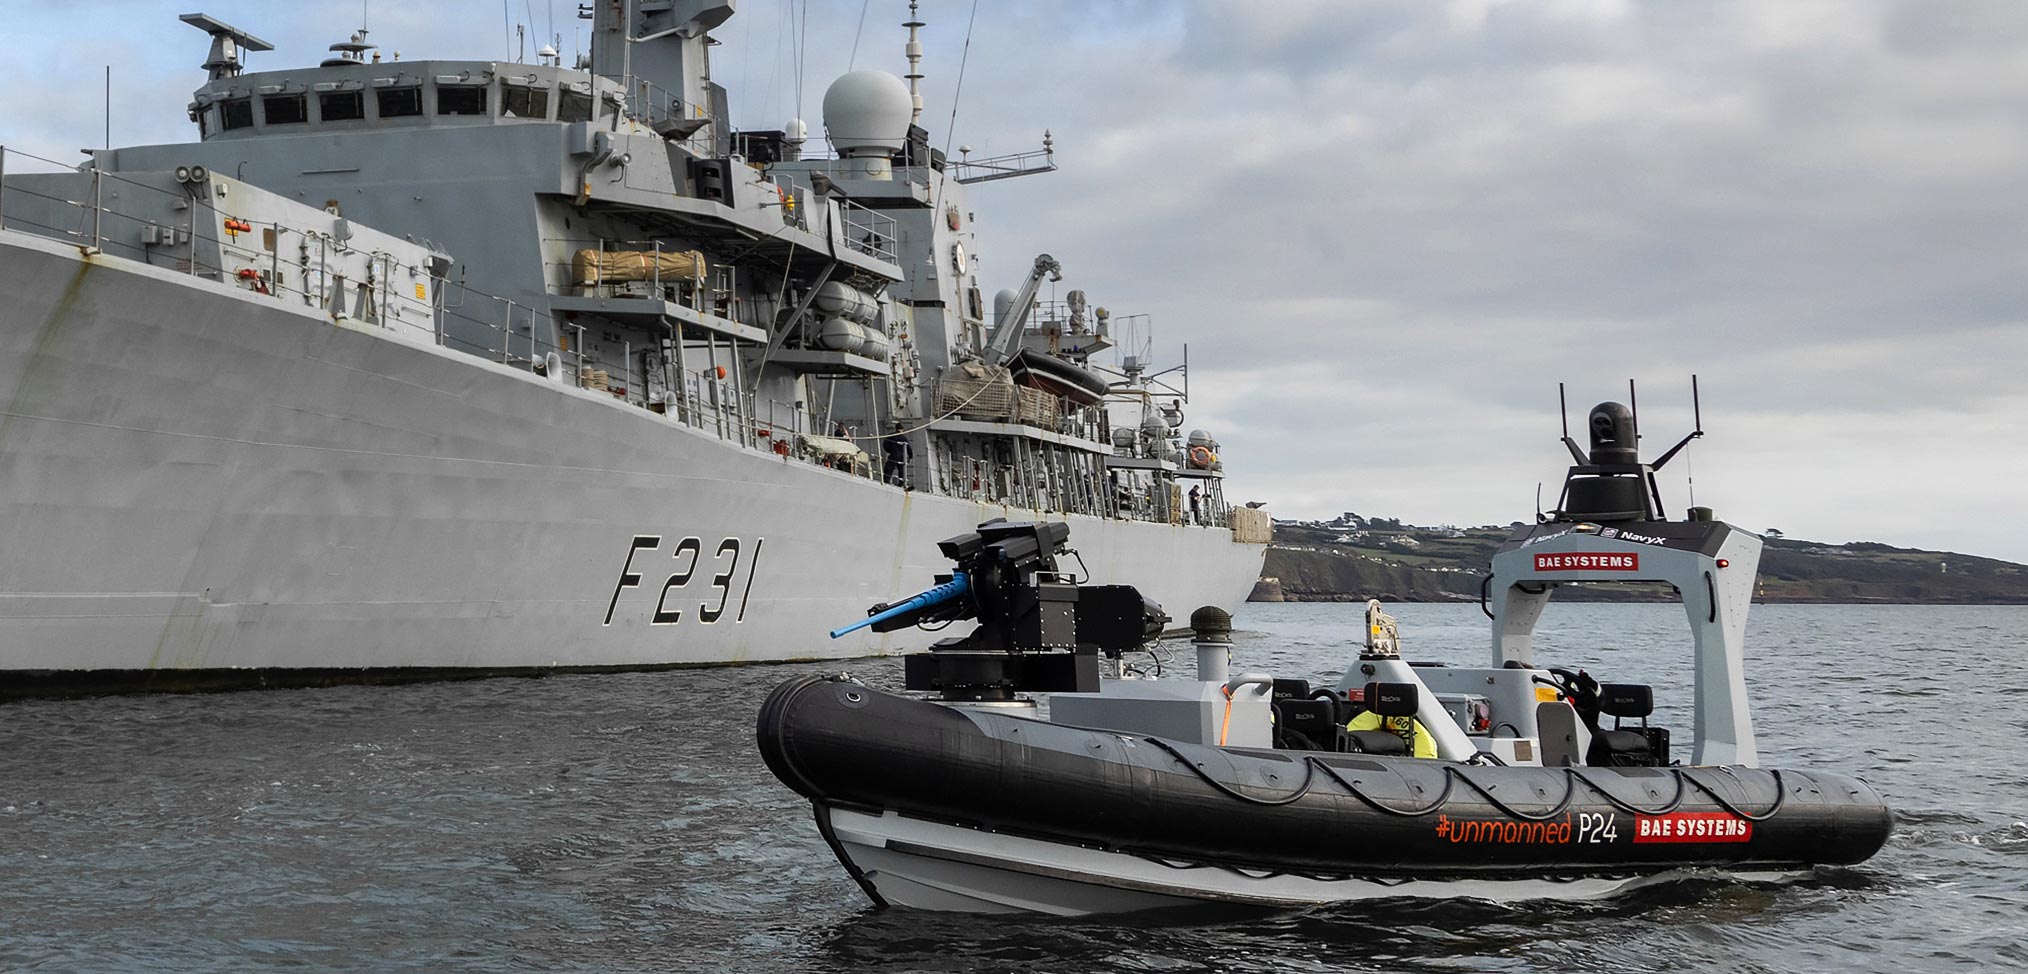 Seaboats without sailors – Royal Navy autonomous RIB development